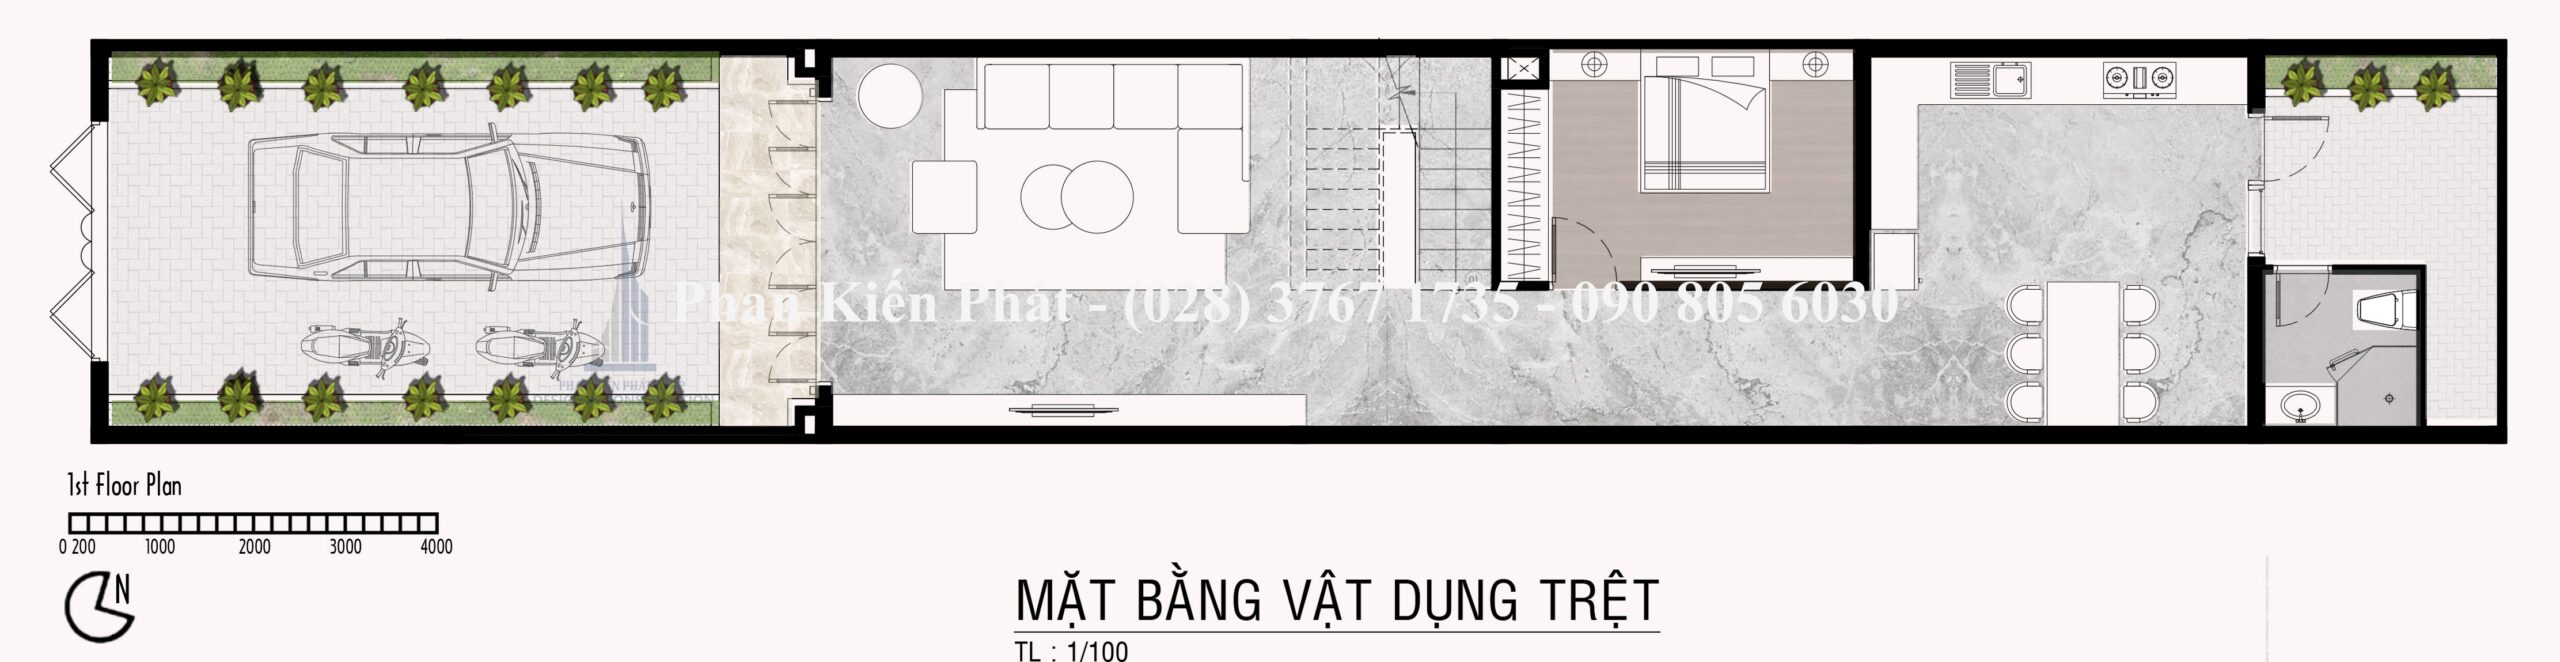 Mat Bang Tret Bo Tri Vat Dung Nha 3 Tang Tan Co Dien Binh Phuoc 2